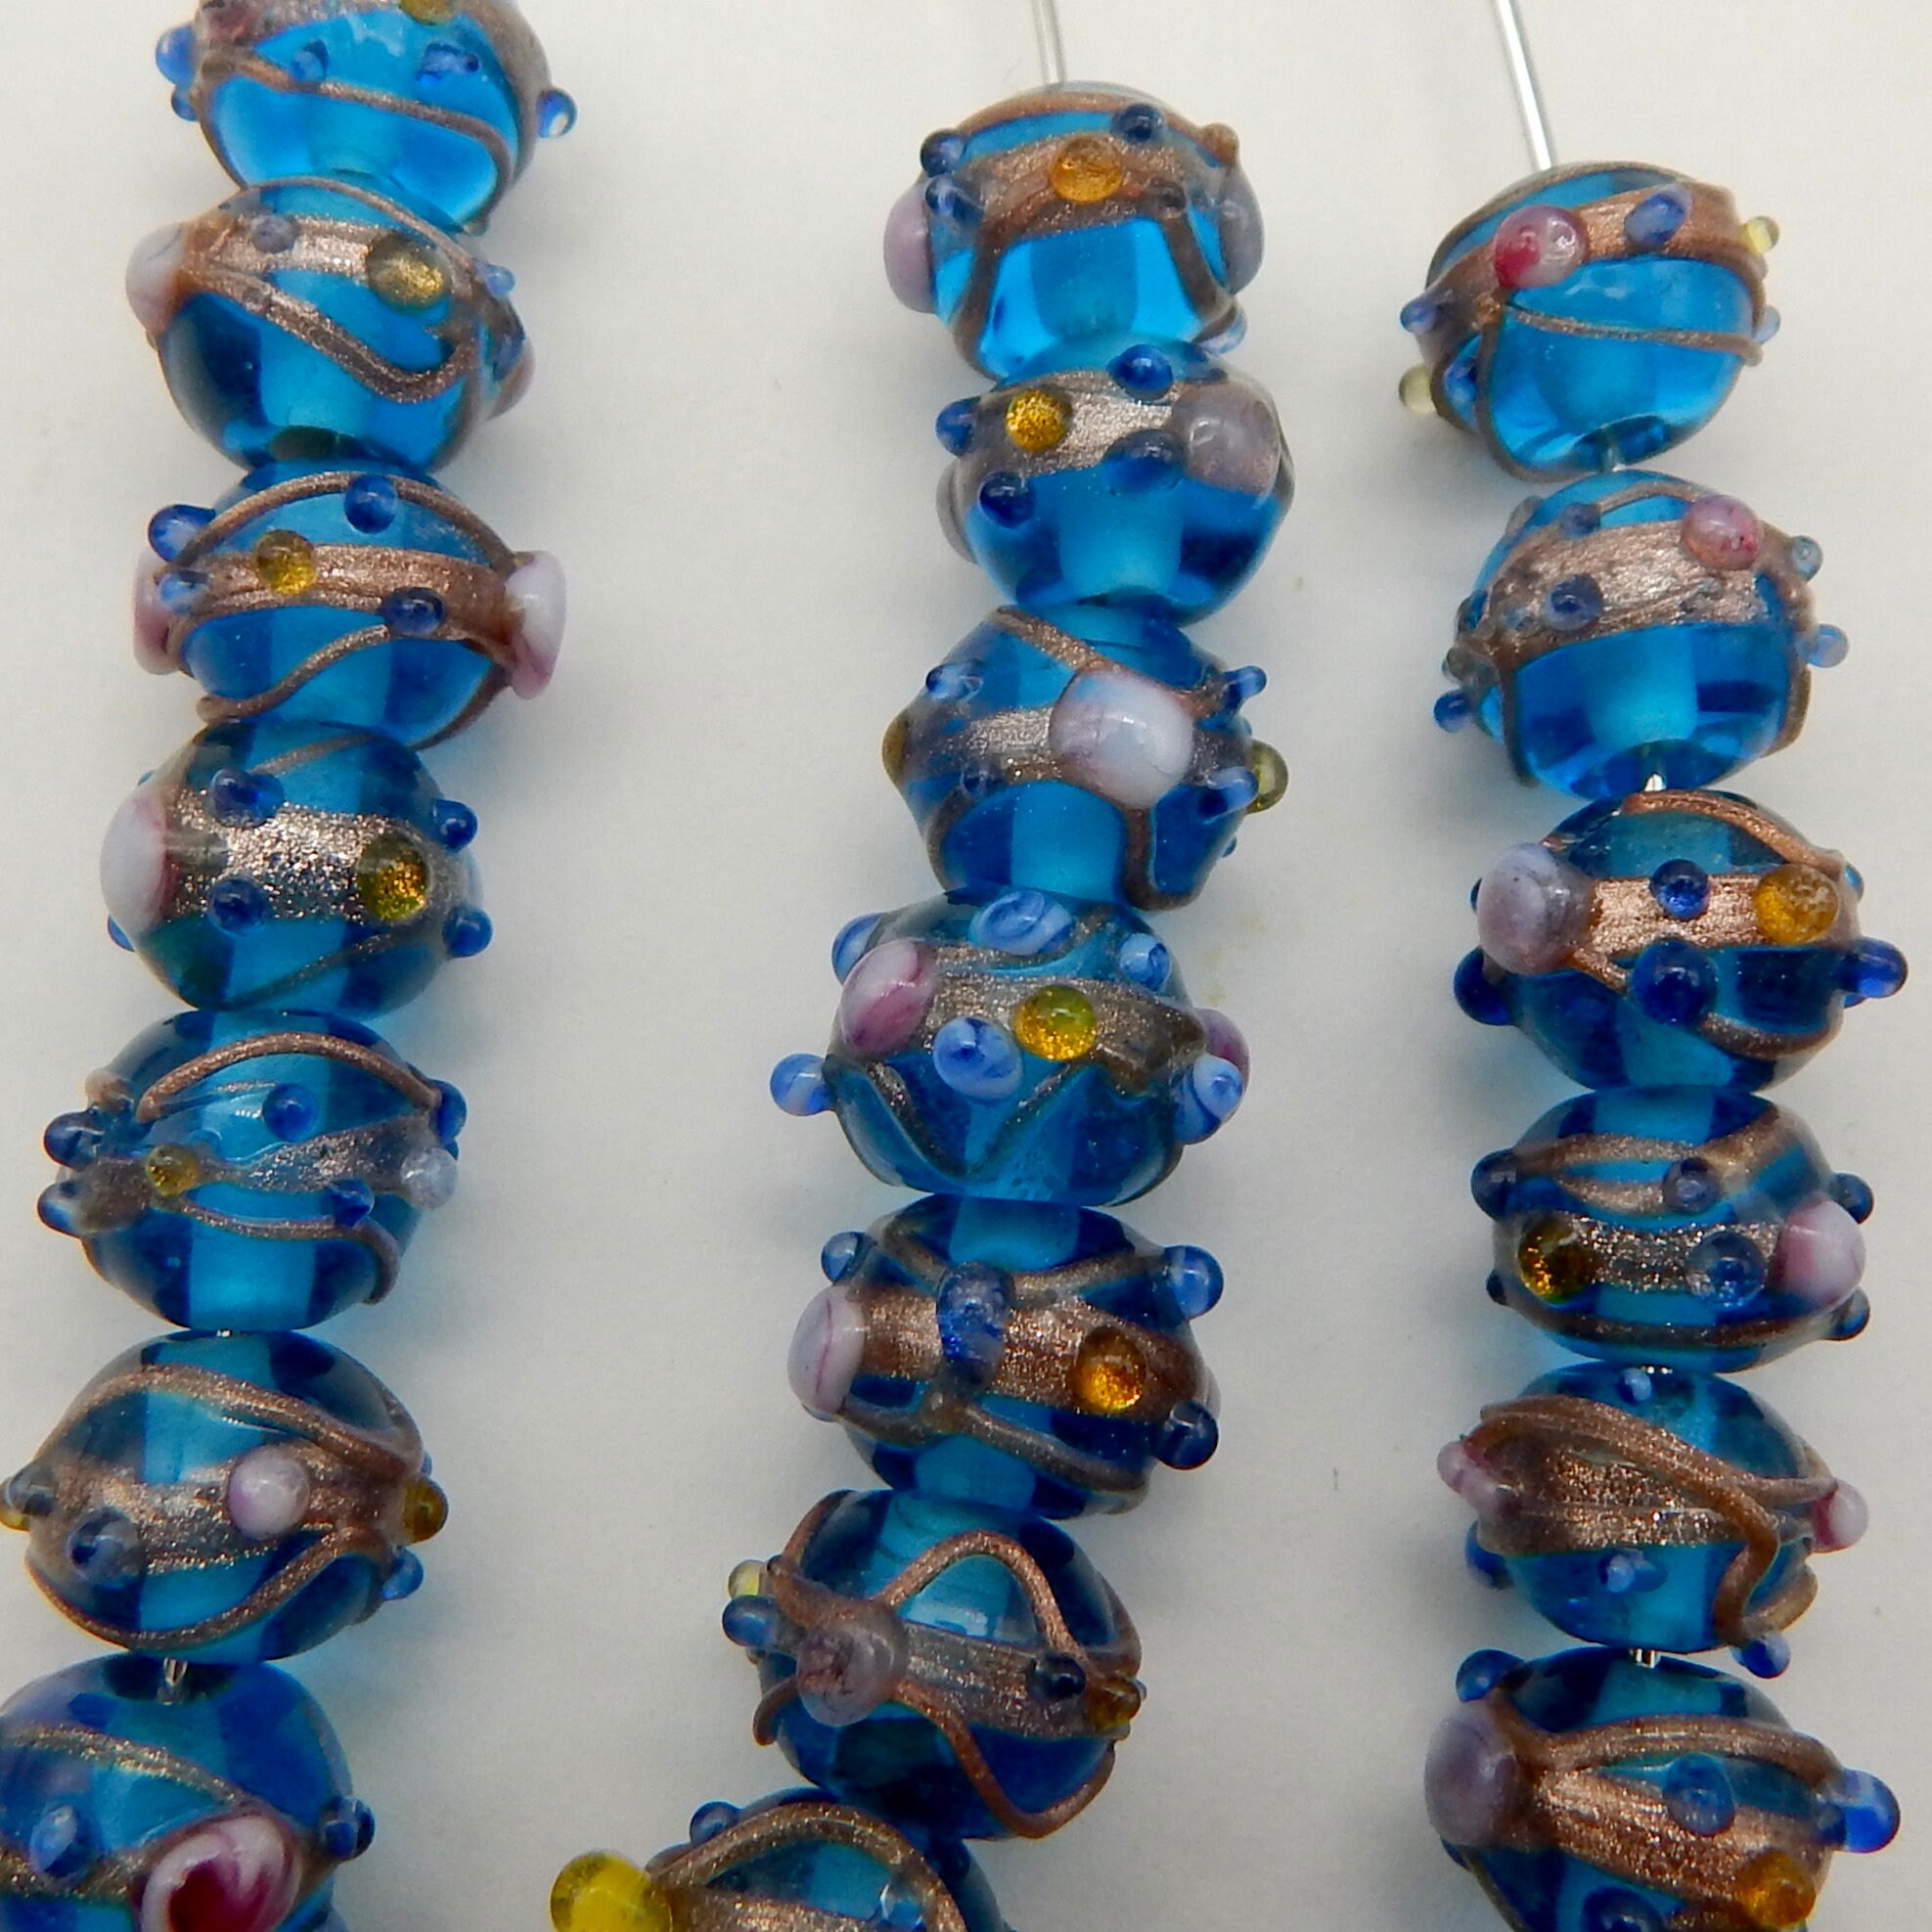 Light Blue 10mm Candy Beads 16 oz – Cake & Craft Supply Shop